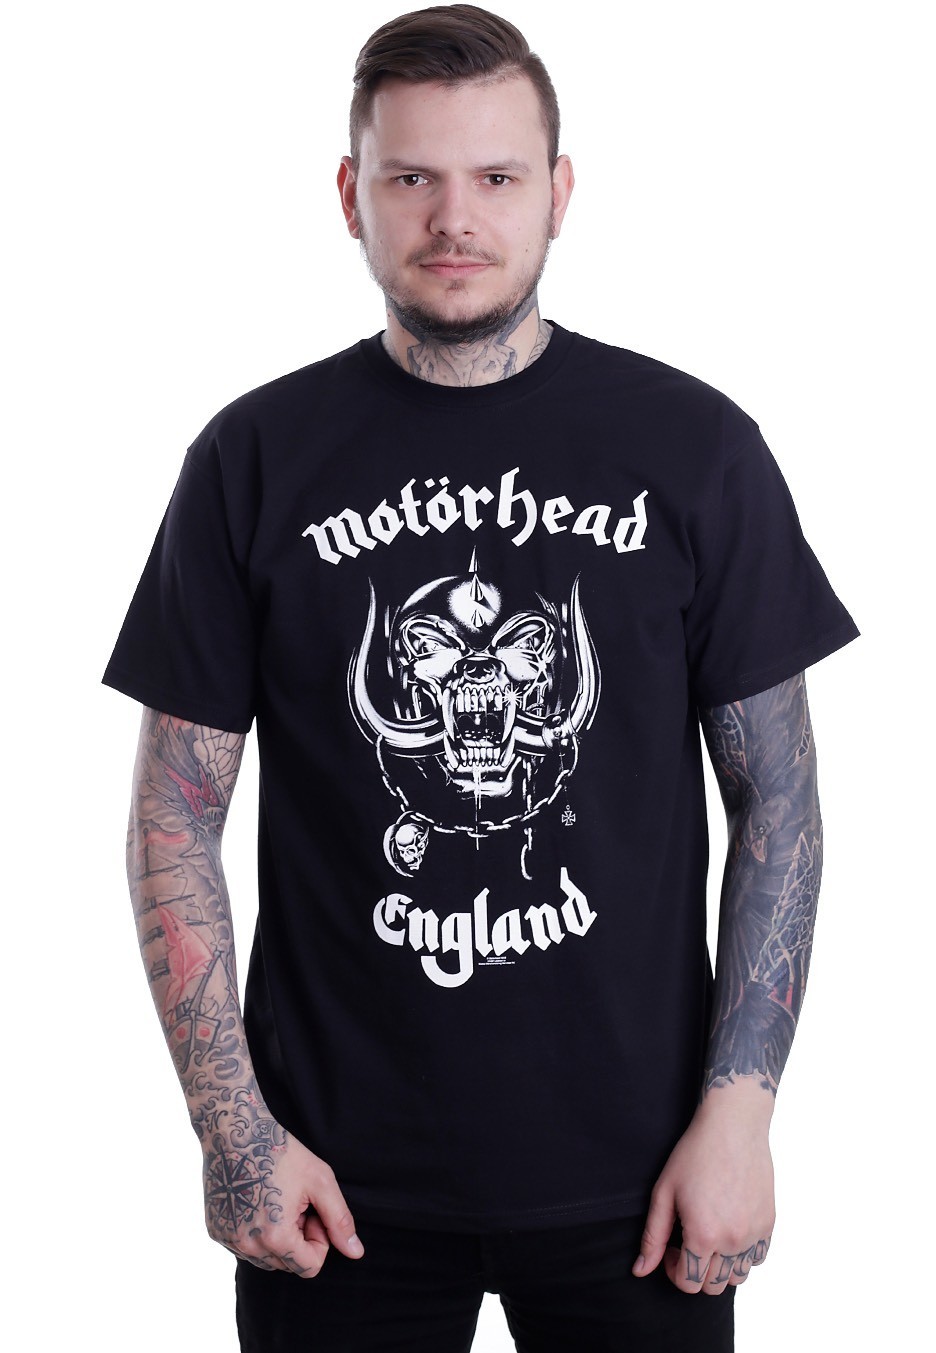 Motörhead - England - T - T-Shirts